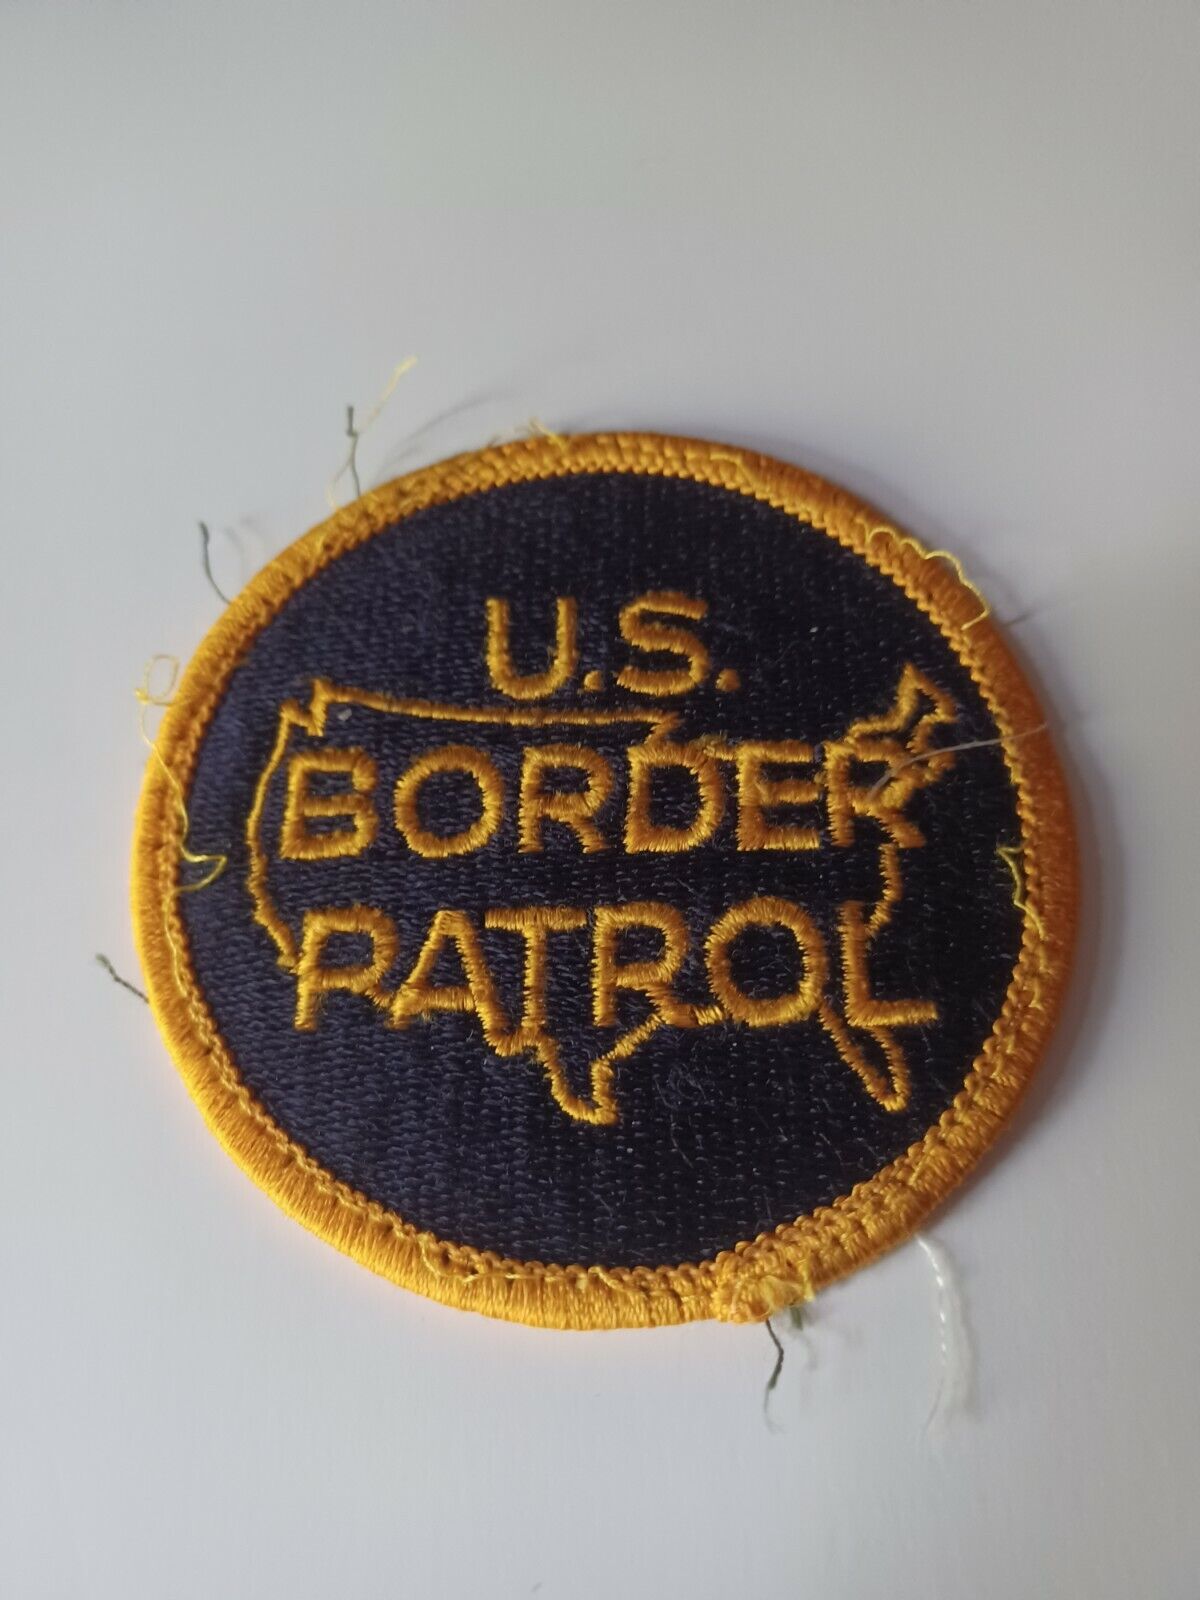 U.S. BORDER PATROL POLICE OFFICER Hat patch